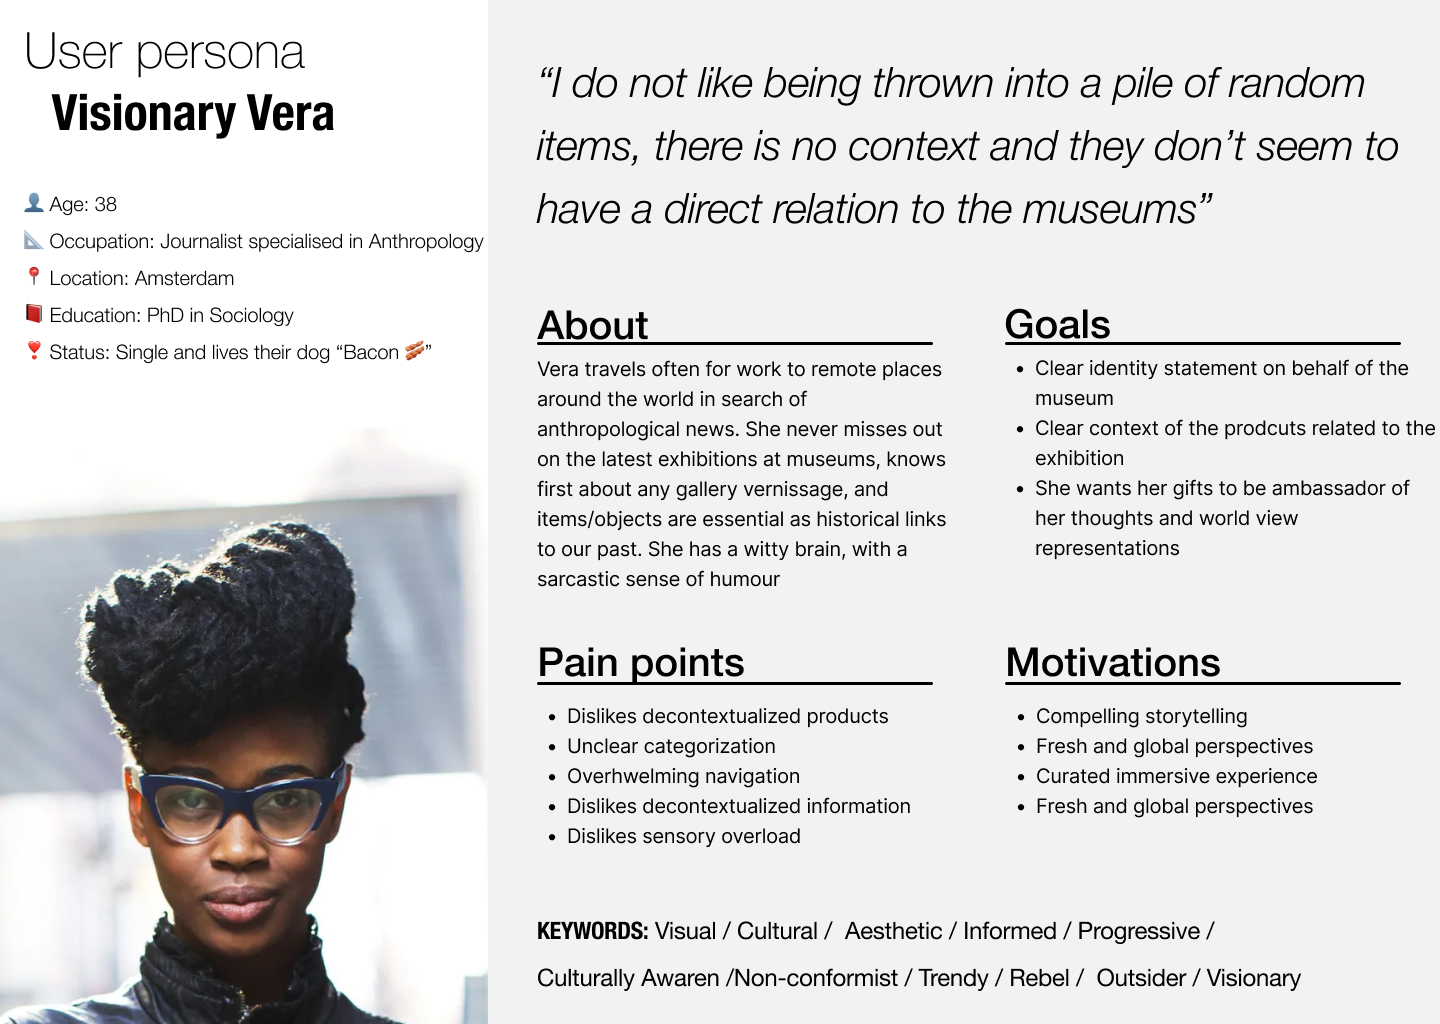 Meet Visionary Vera